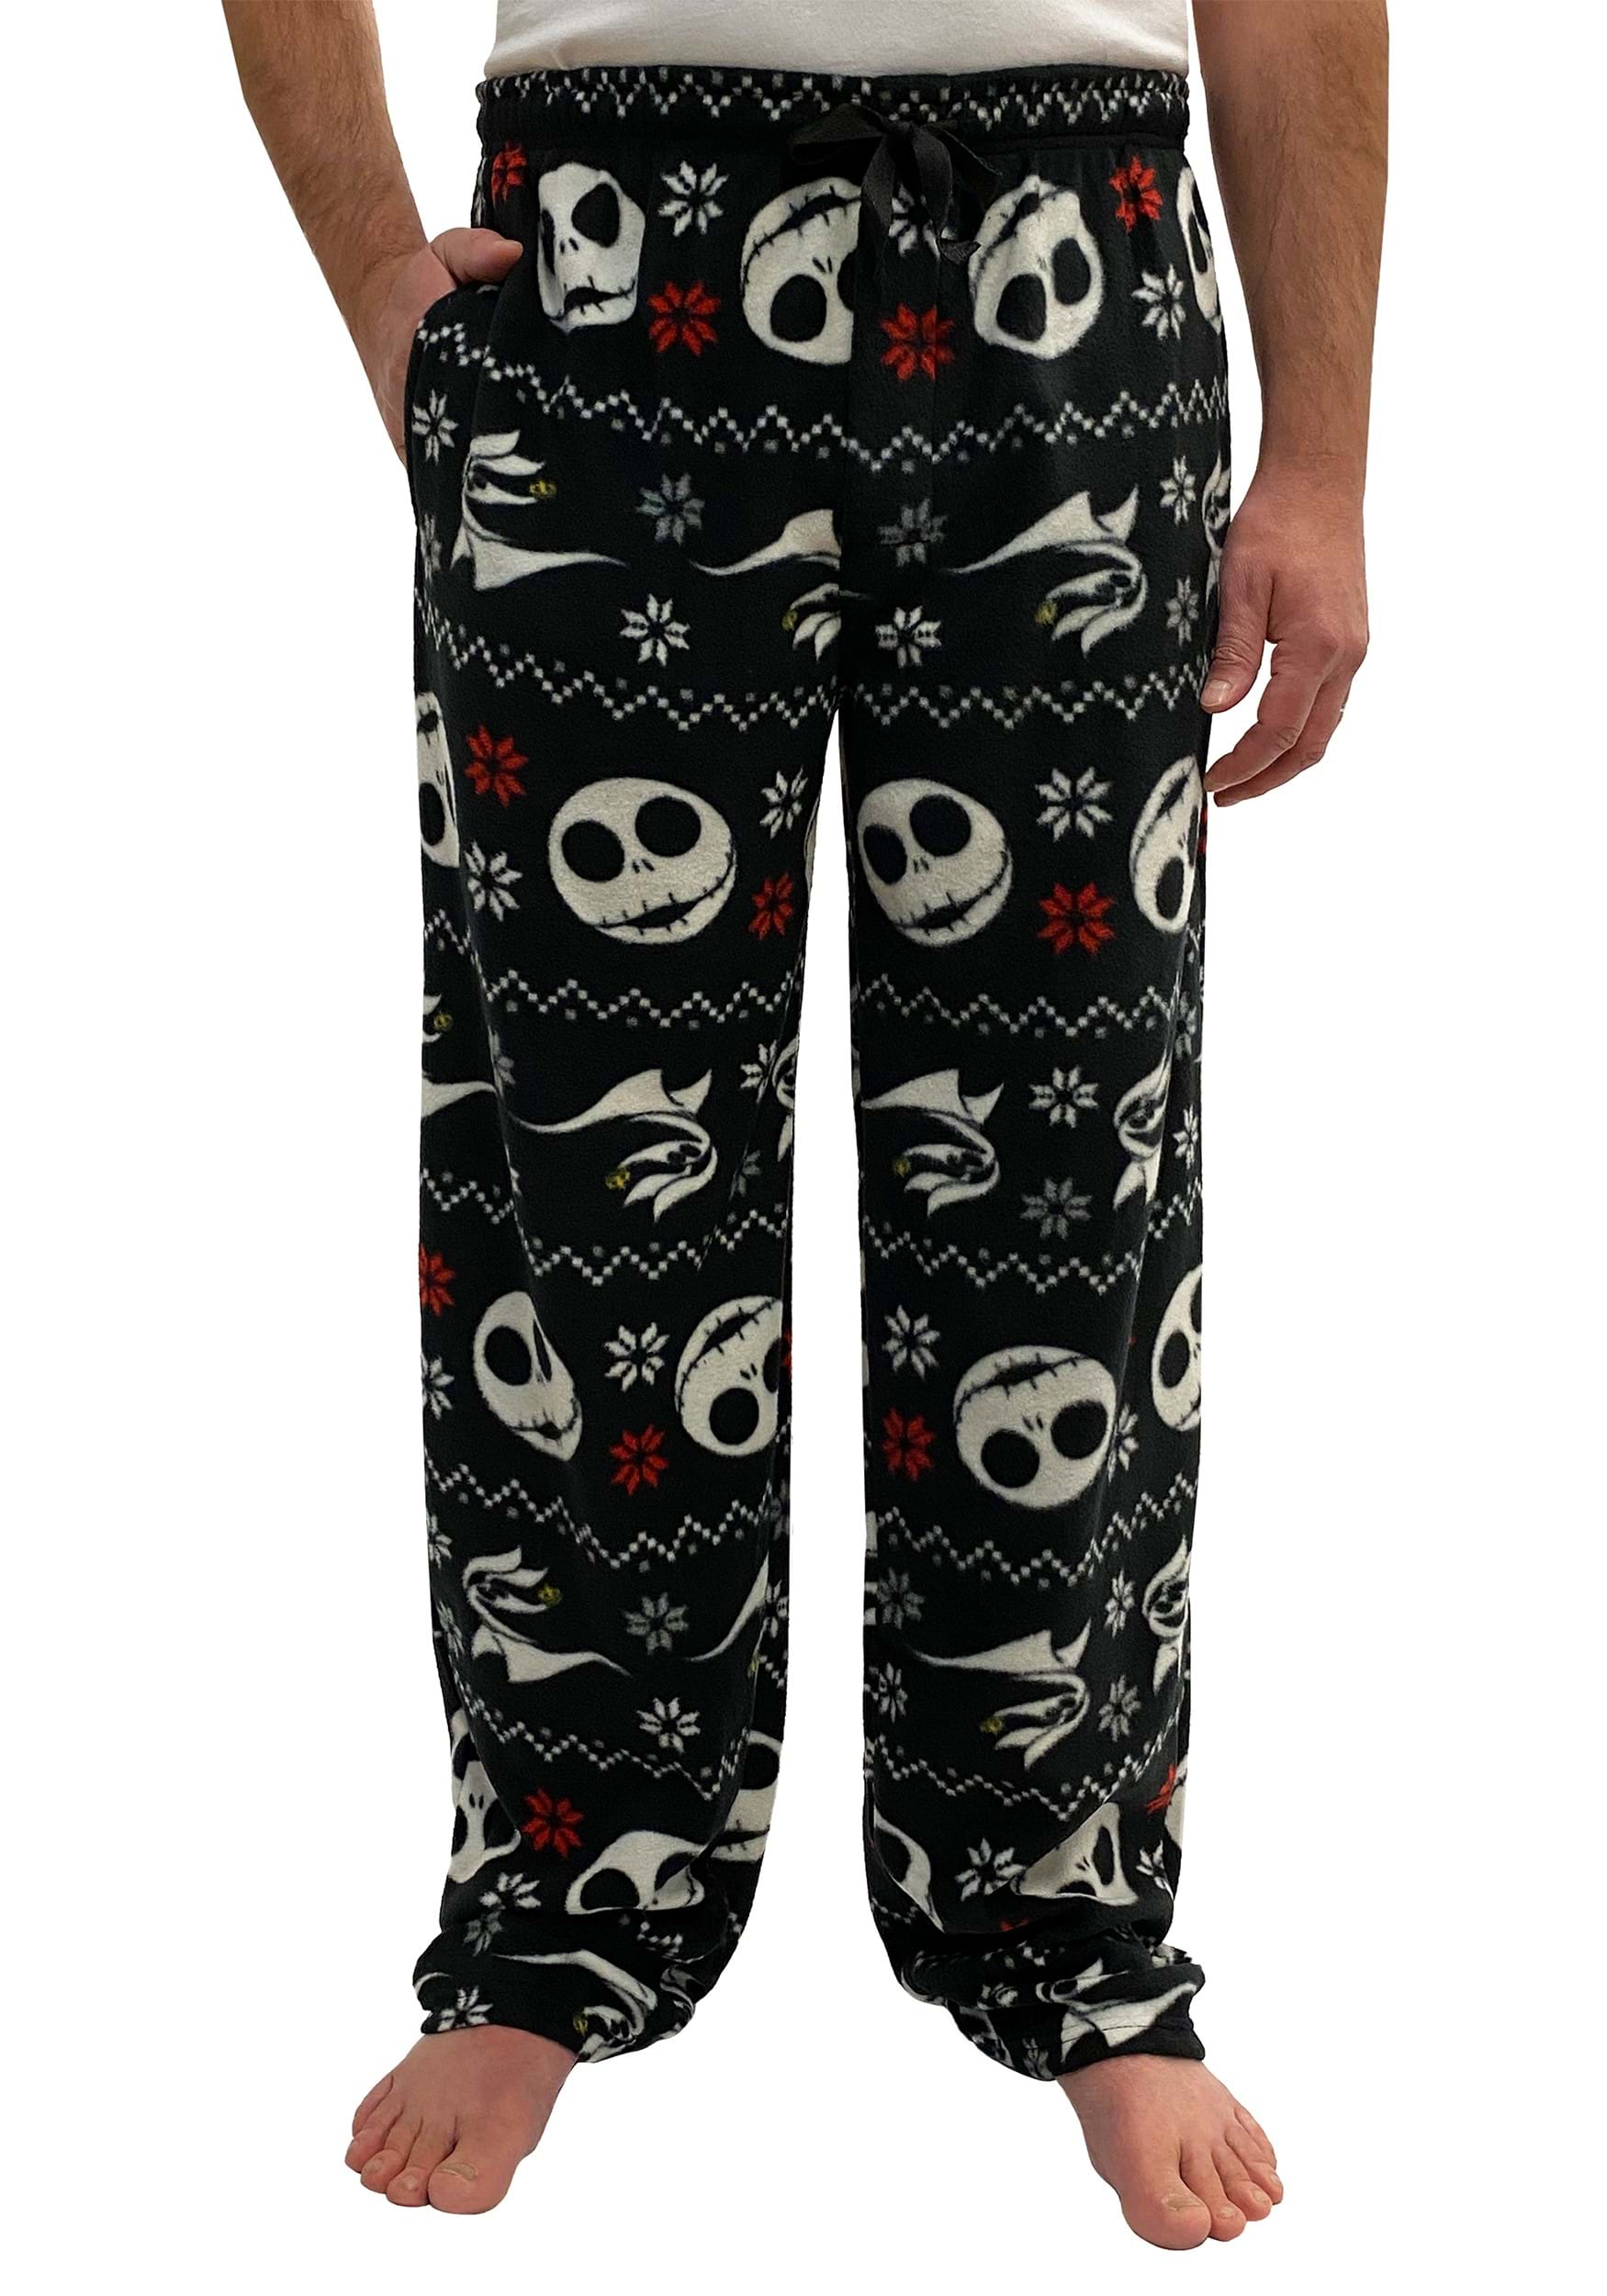 Jack Nightmare Before Christmas Plush Sleep Pants